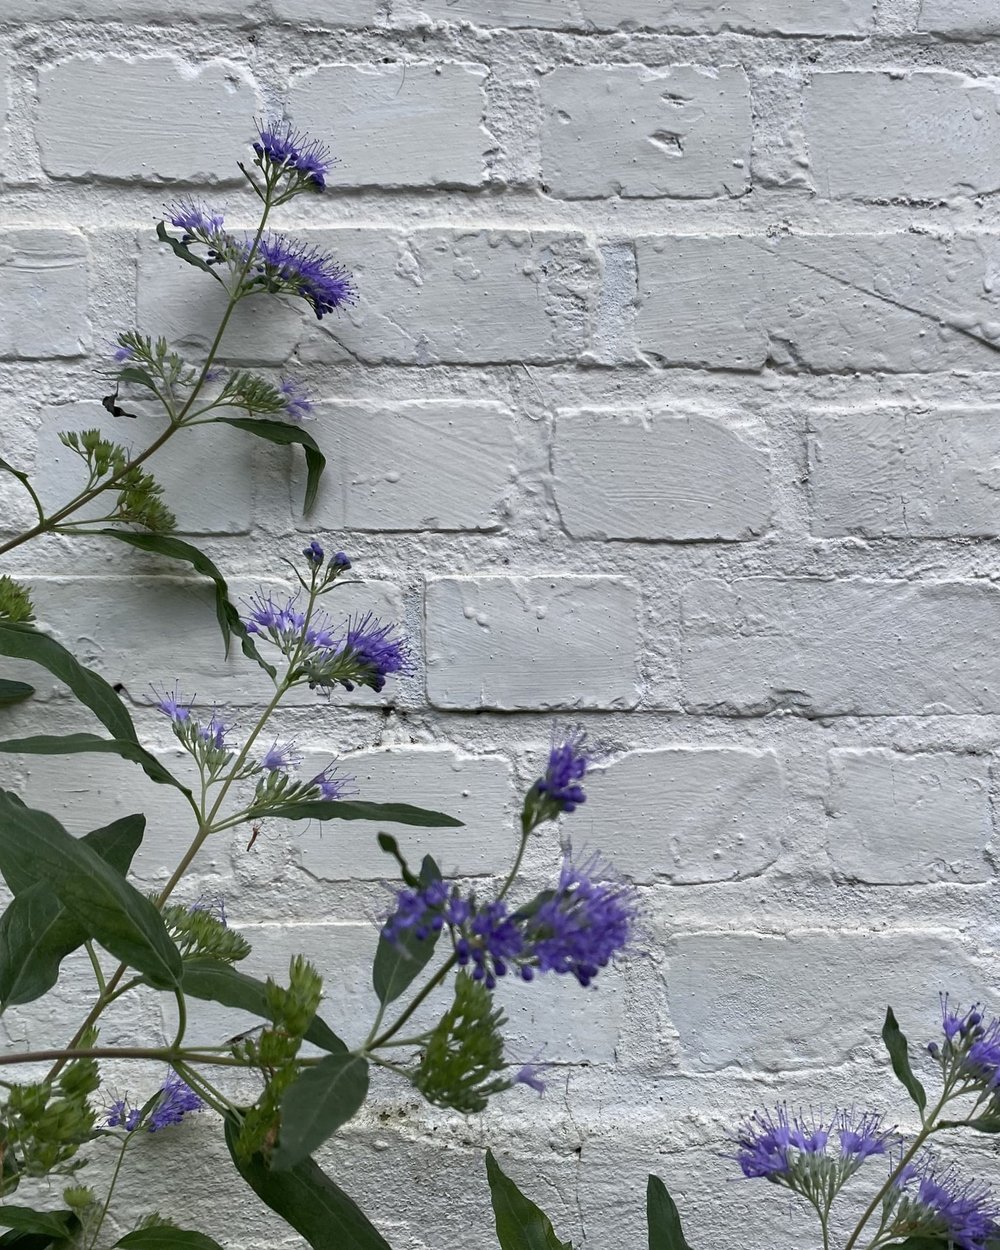 de-tuinen-van-tom-struyf-stadstuin-patio-patiotuin-blauwbaard-caryopteris-witte-muur-contrast.jpg